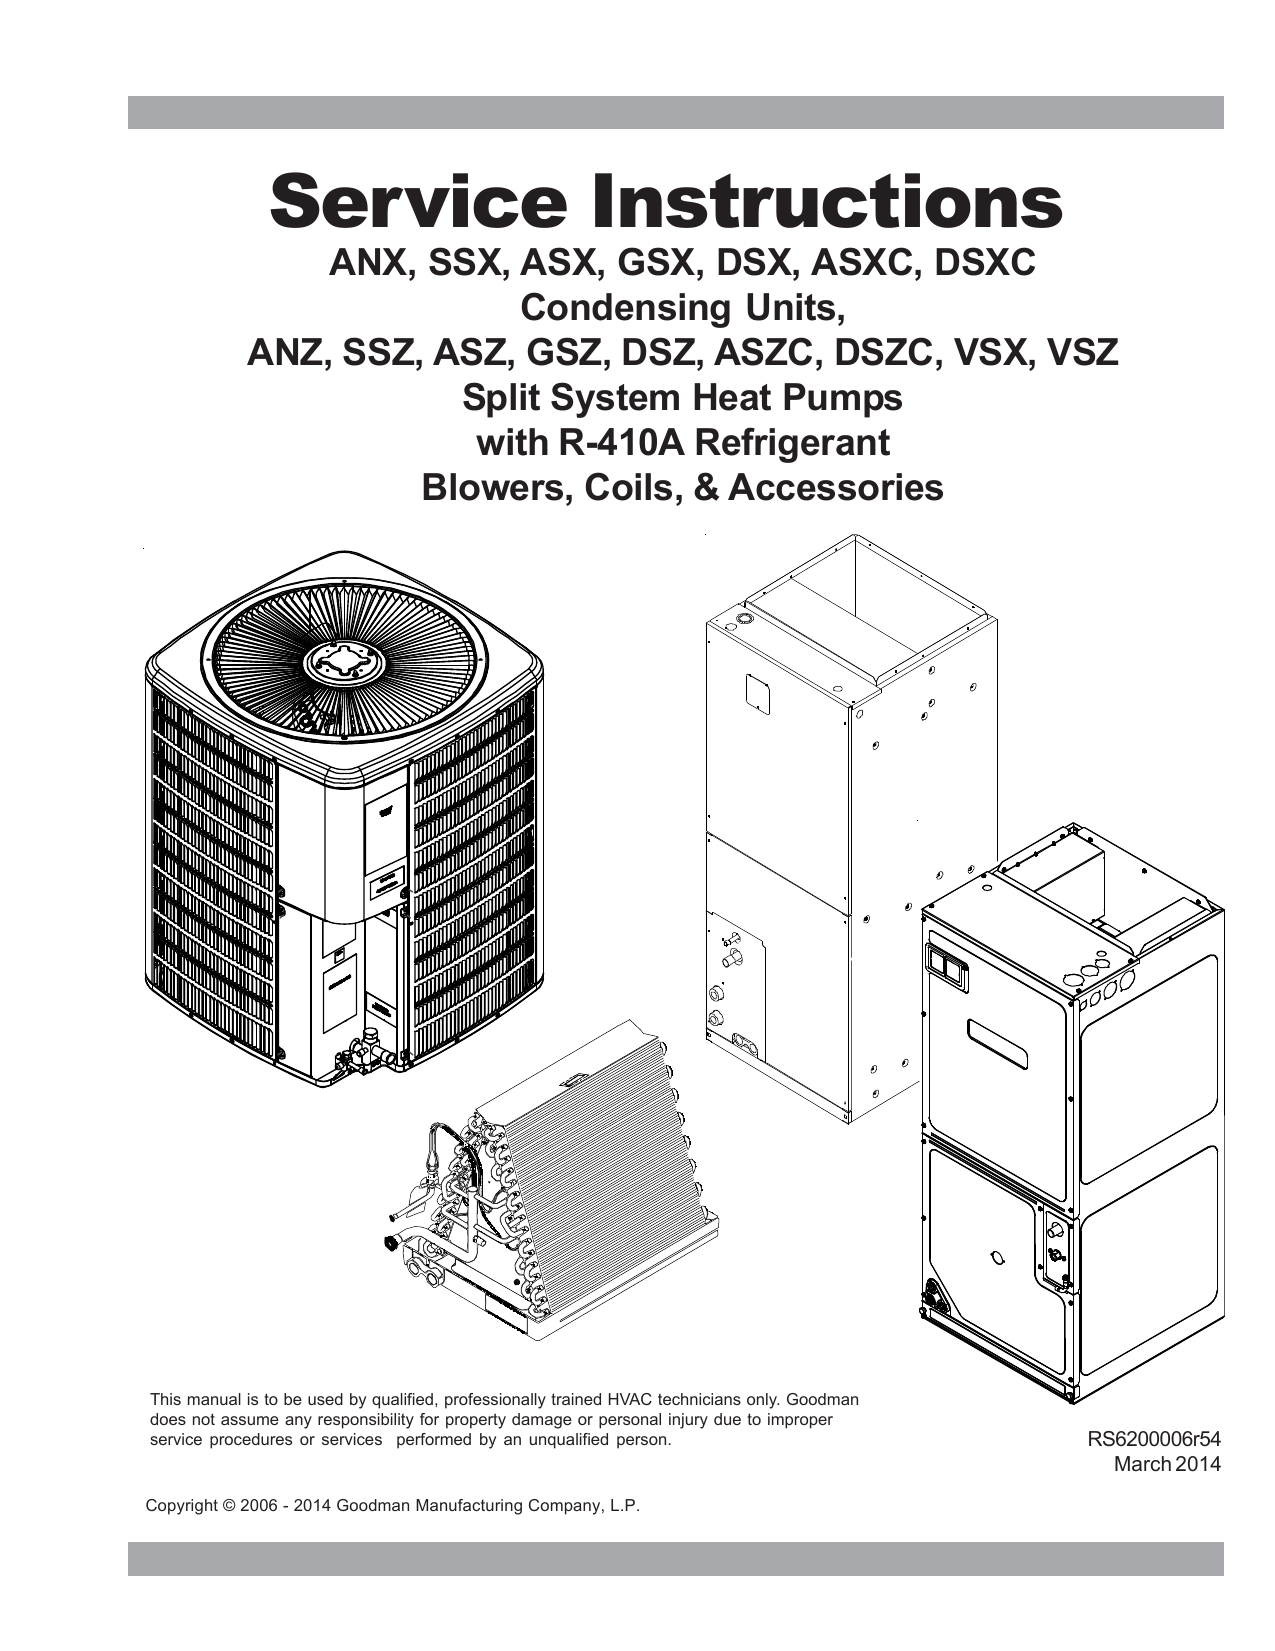 Service Instructions | manualzz.com